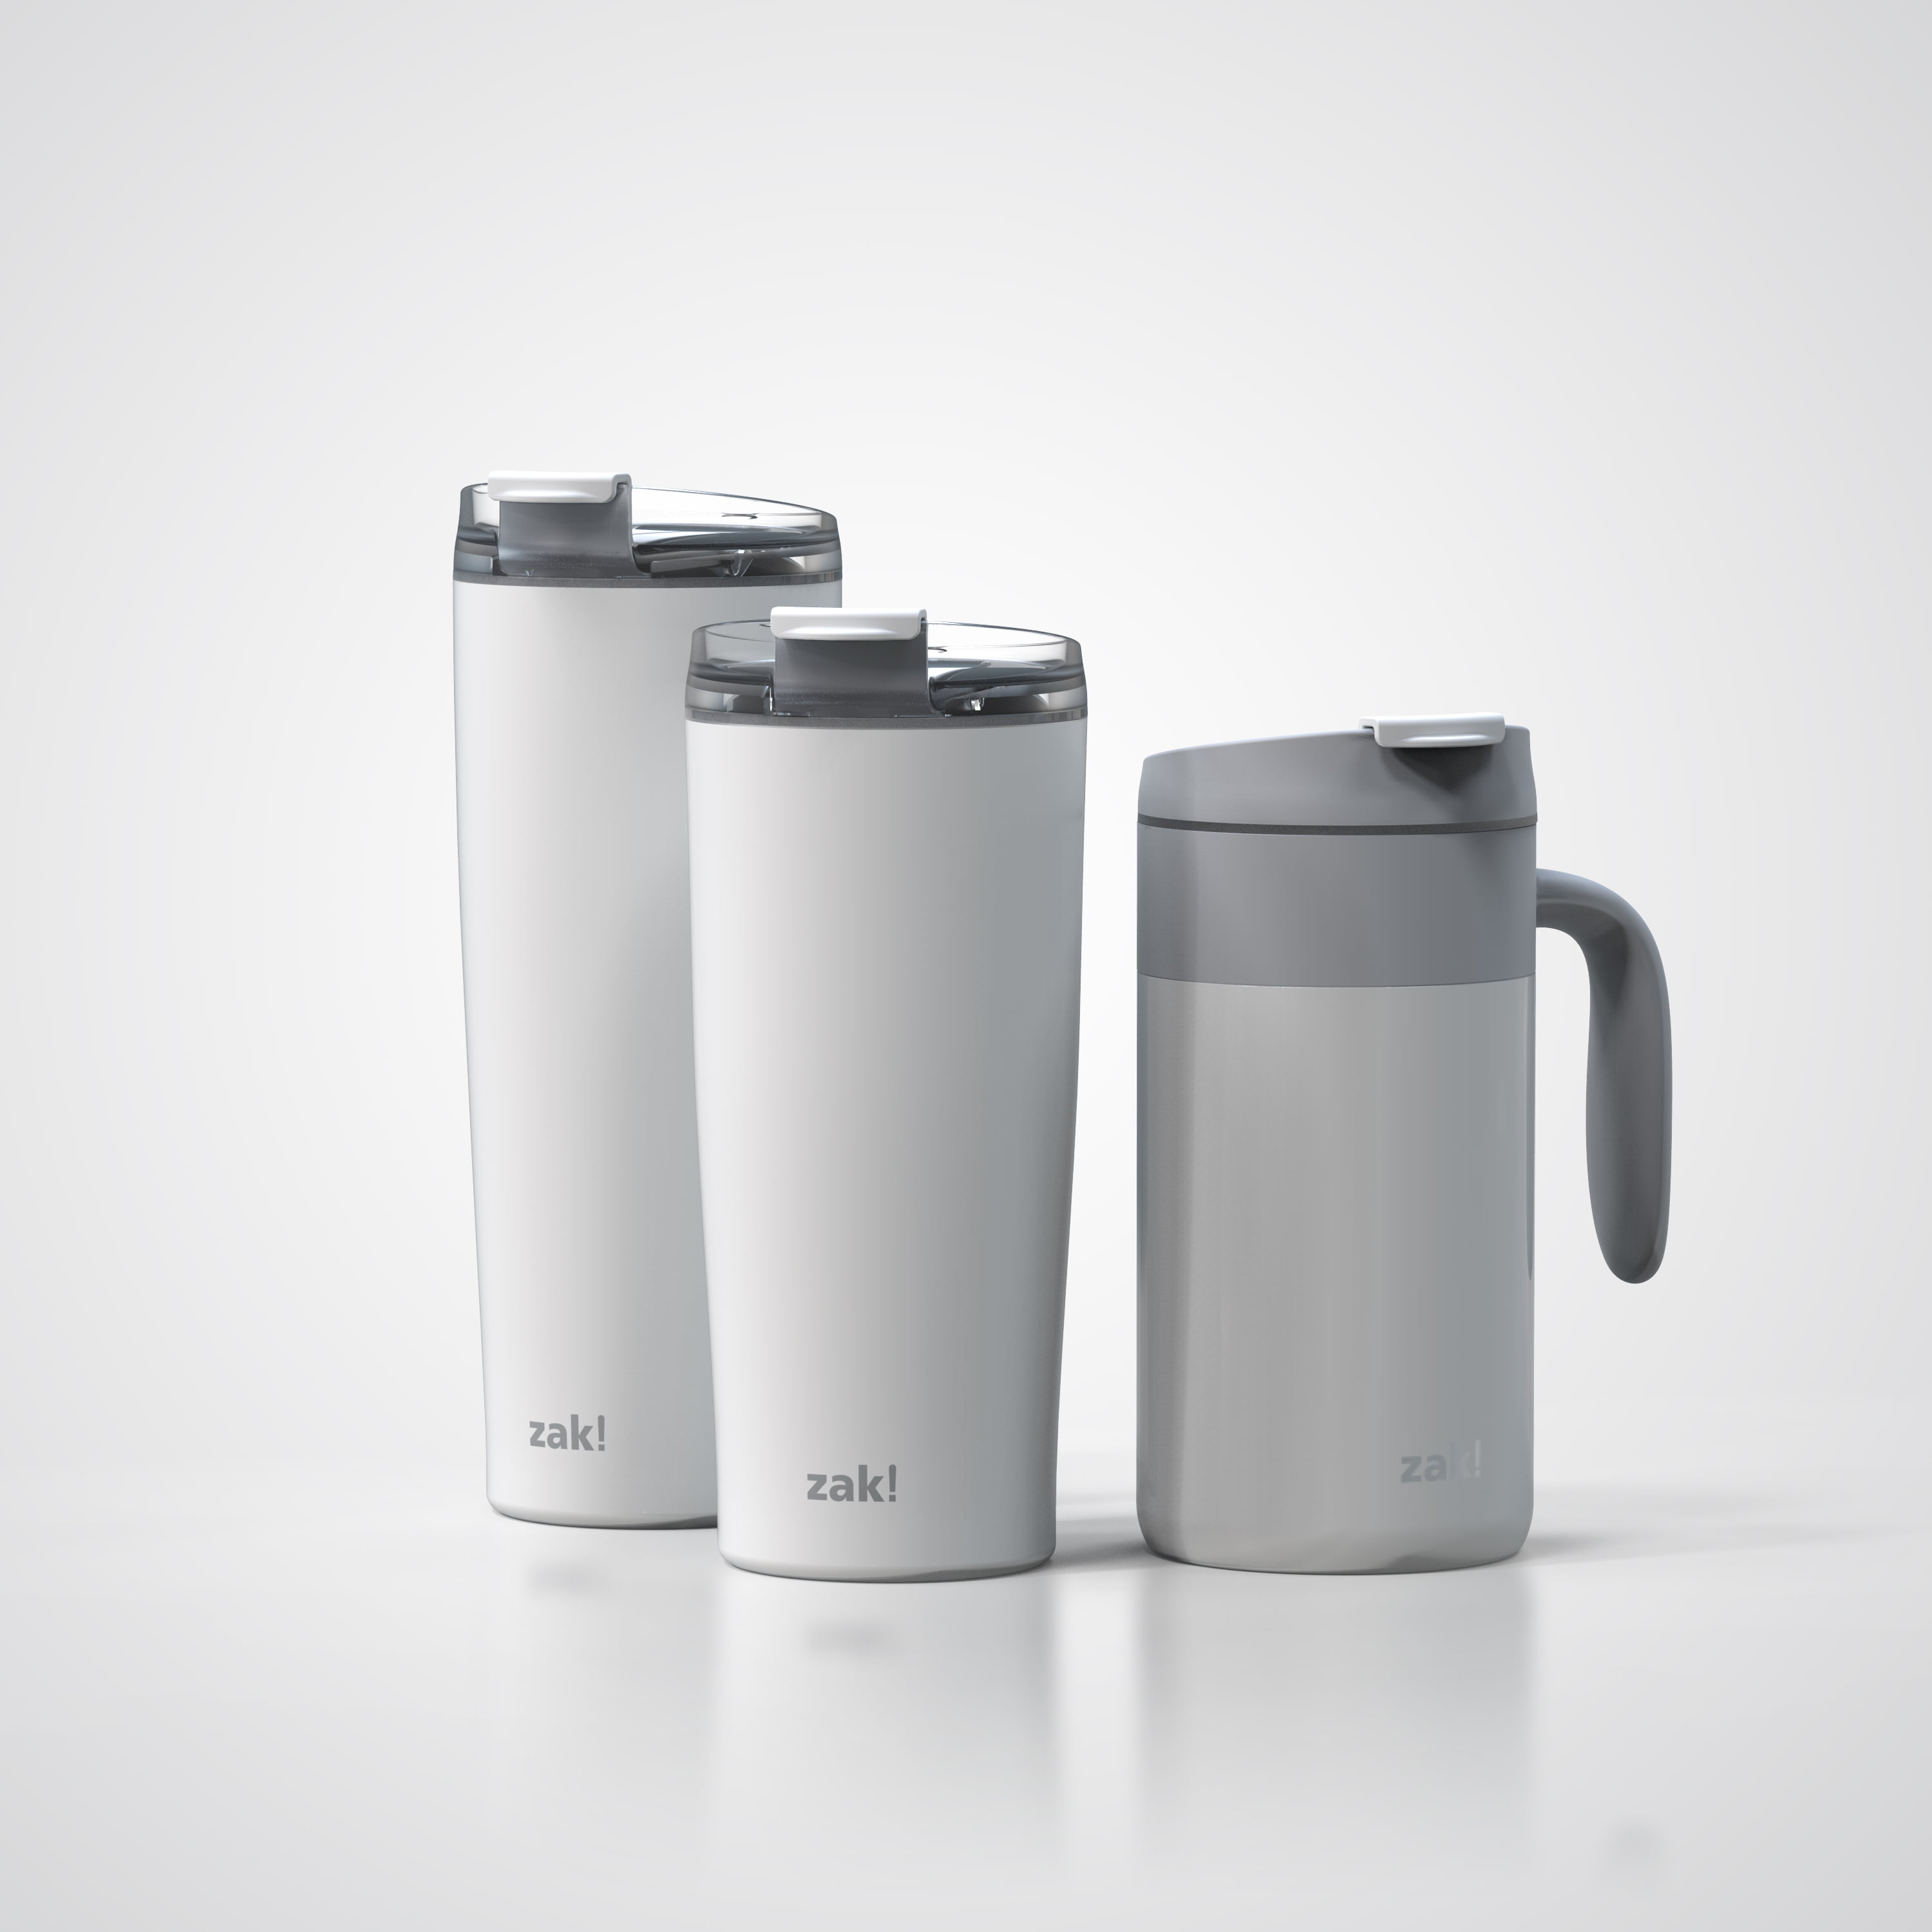 Zak! Designs 20 oz Insulated Mug Gray Delivery - DoorDash